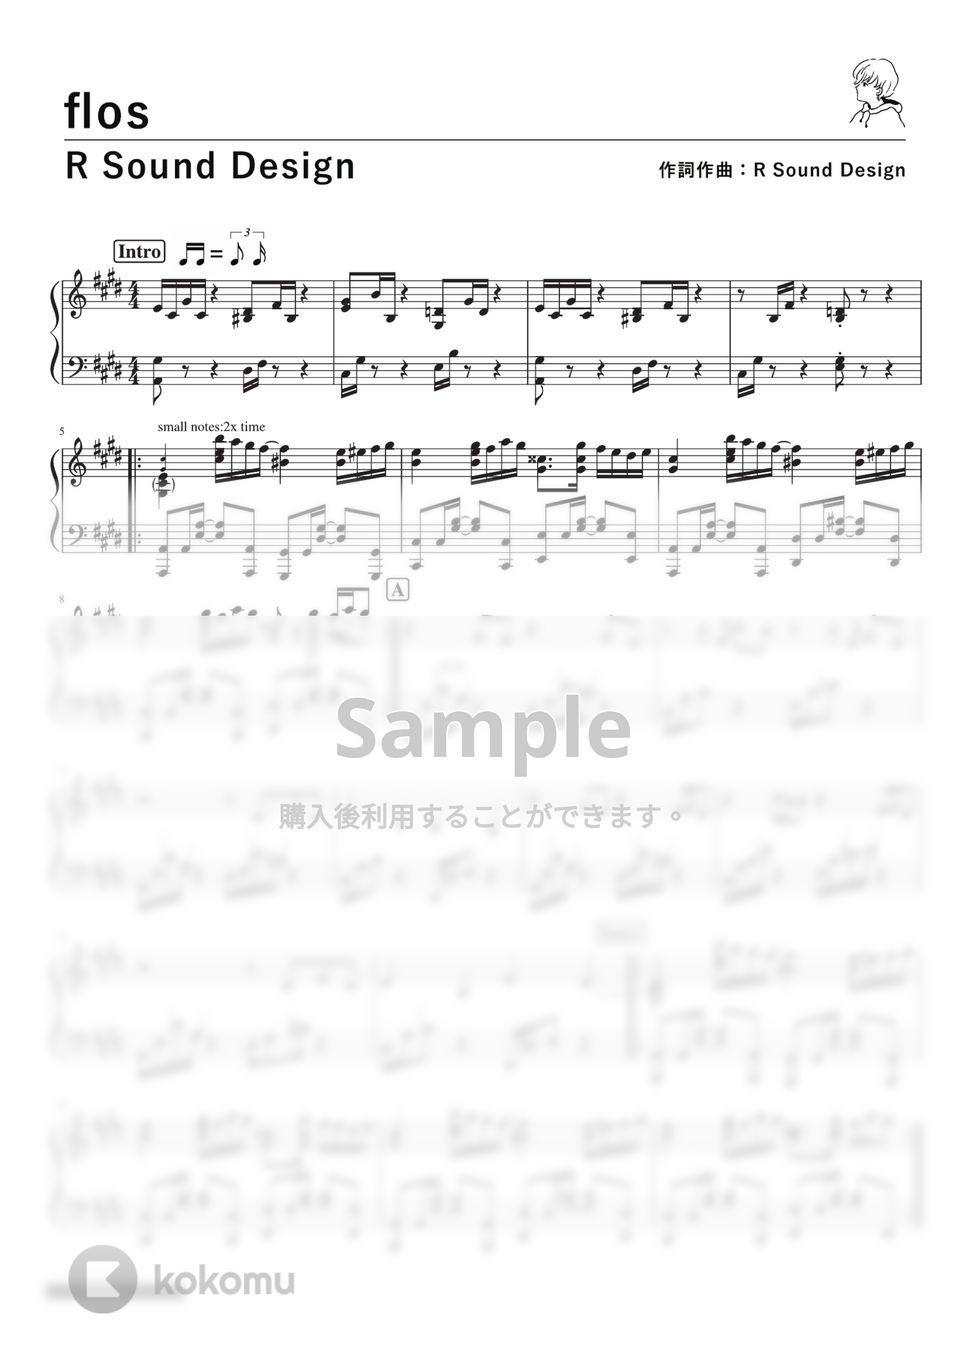 R Sound Design - flos (Piano Solo) by 深根 / Fukane